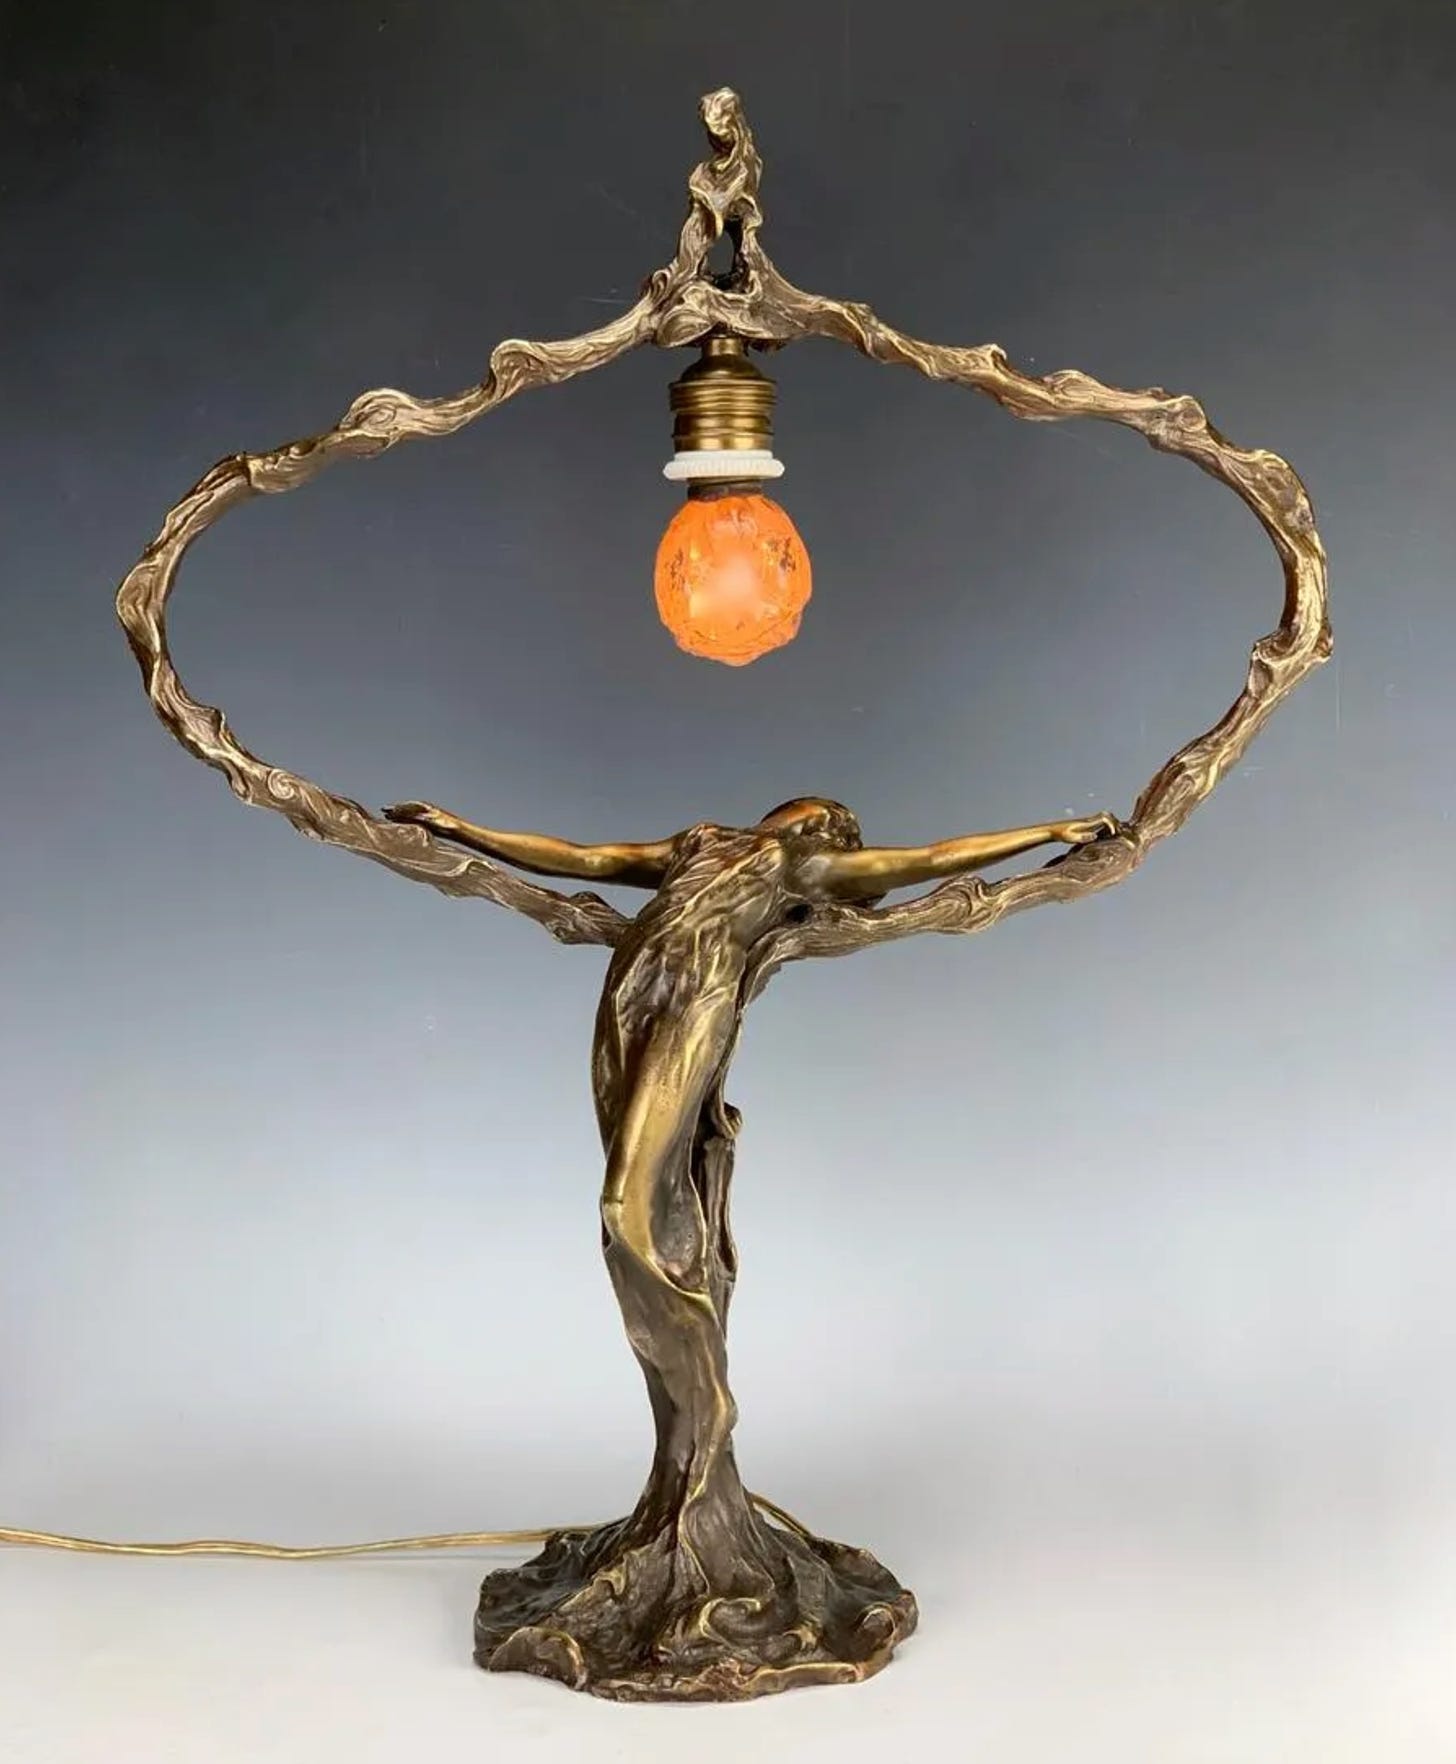 M Méliodon, A Metamorphosis of a Lady into a Tree, gilt bronze lamp, 53 cm H. © Treasure Seeker auction, Pasadena (USA), lot #0101, 2021-04-18.